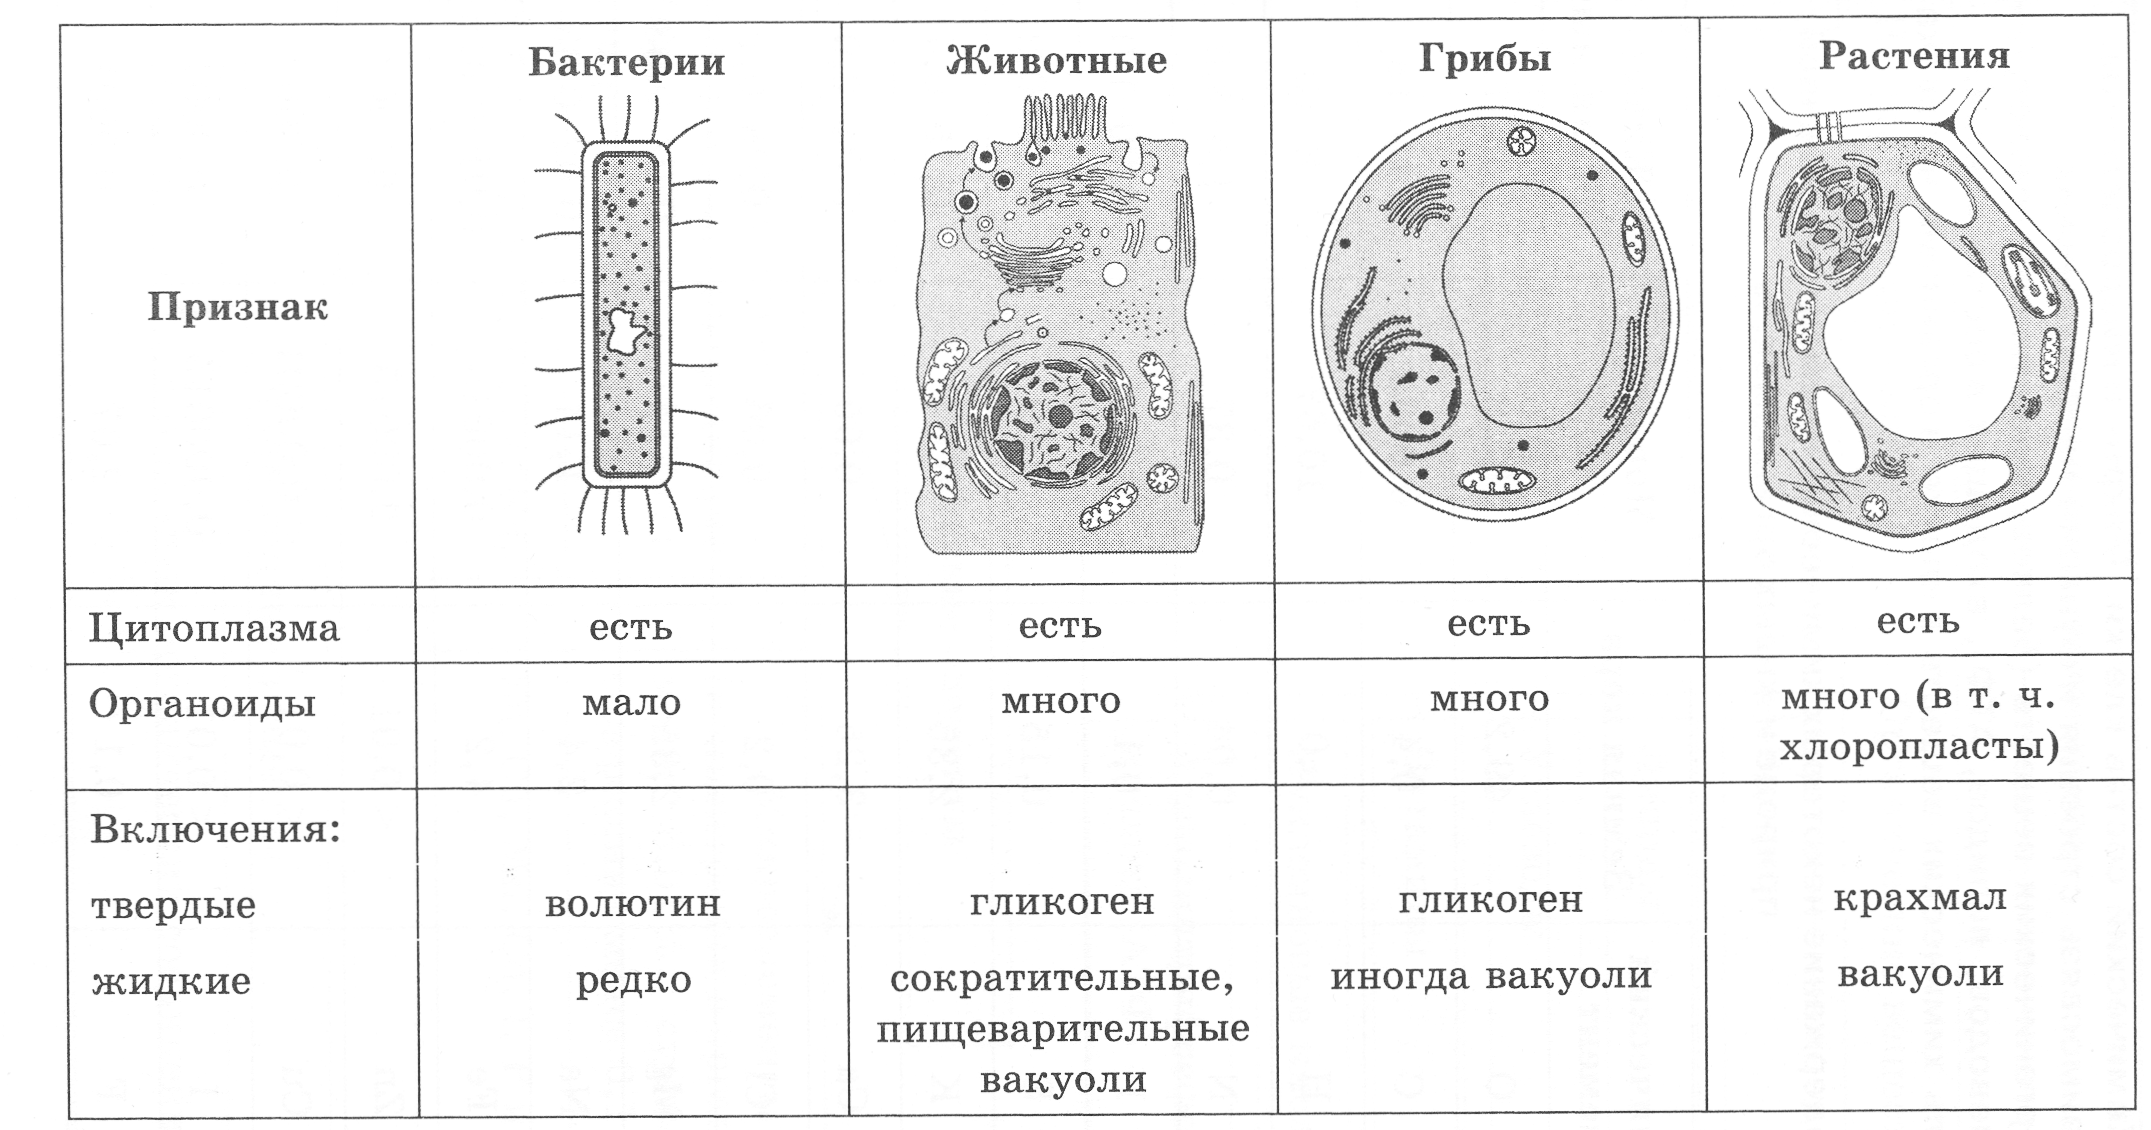 Органоиды клетки прокариотов